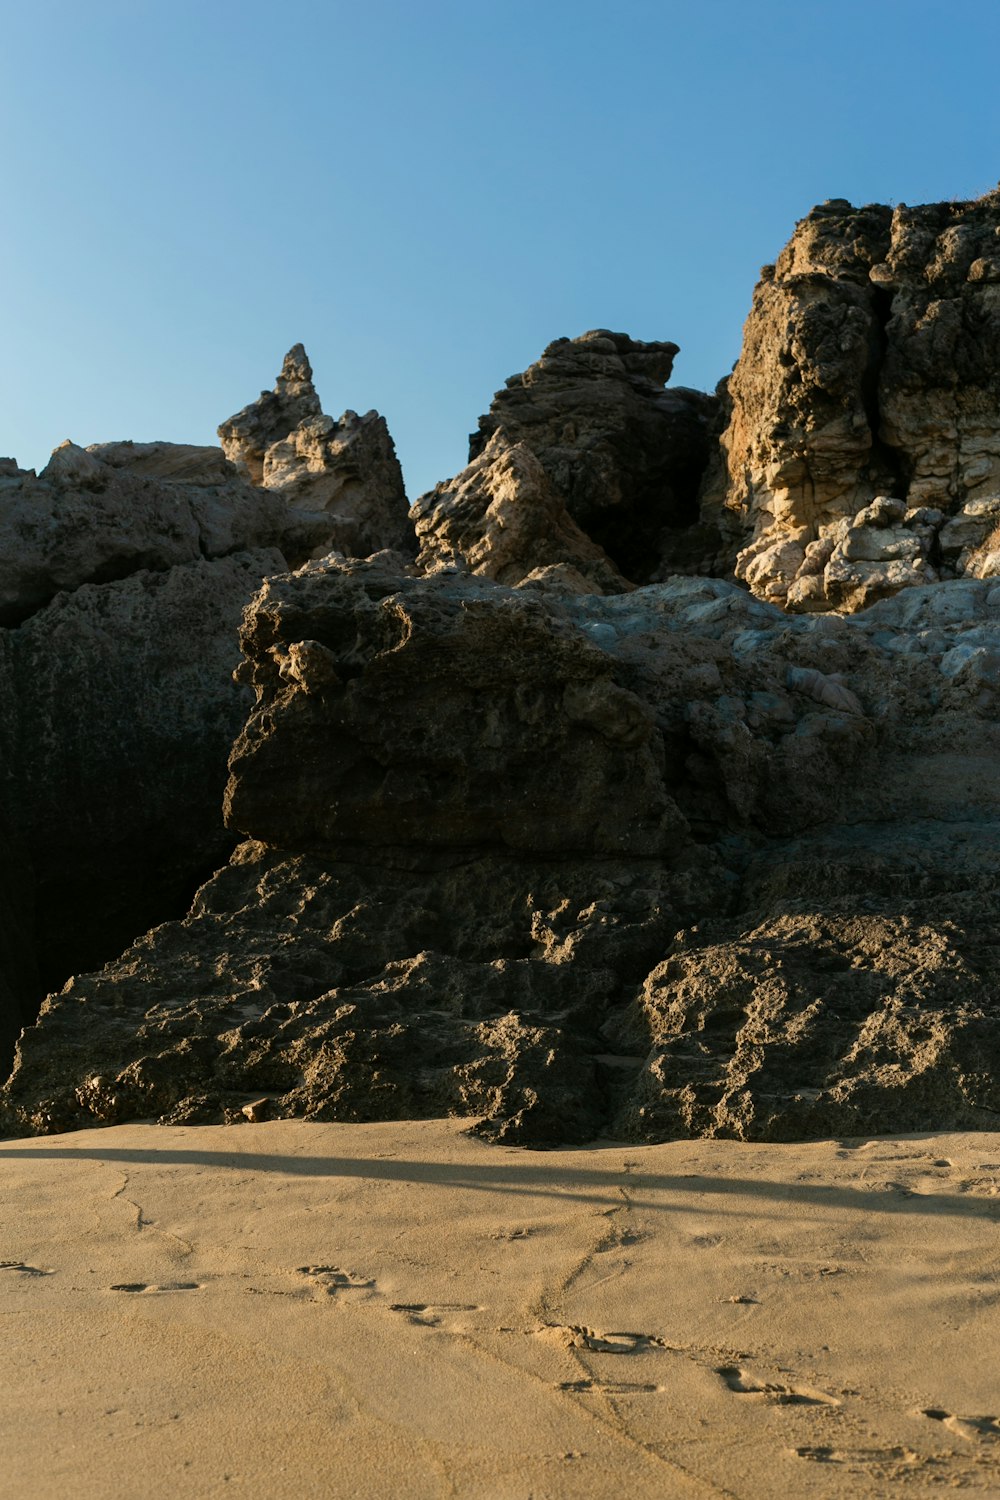 a person walking on a sandy beach next to rocks